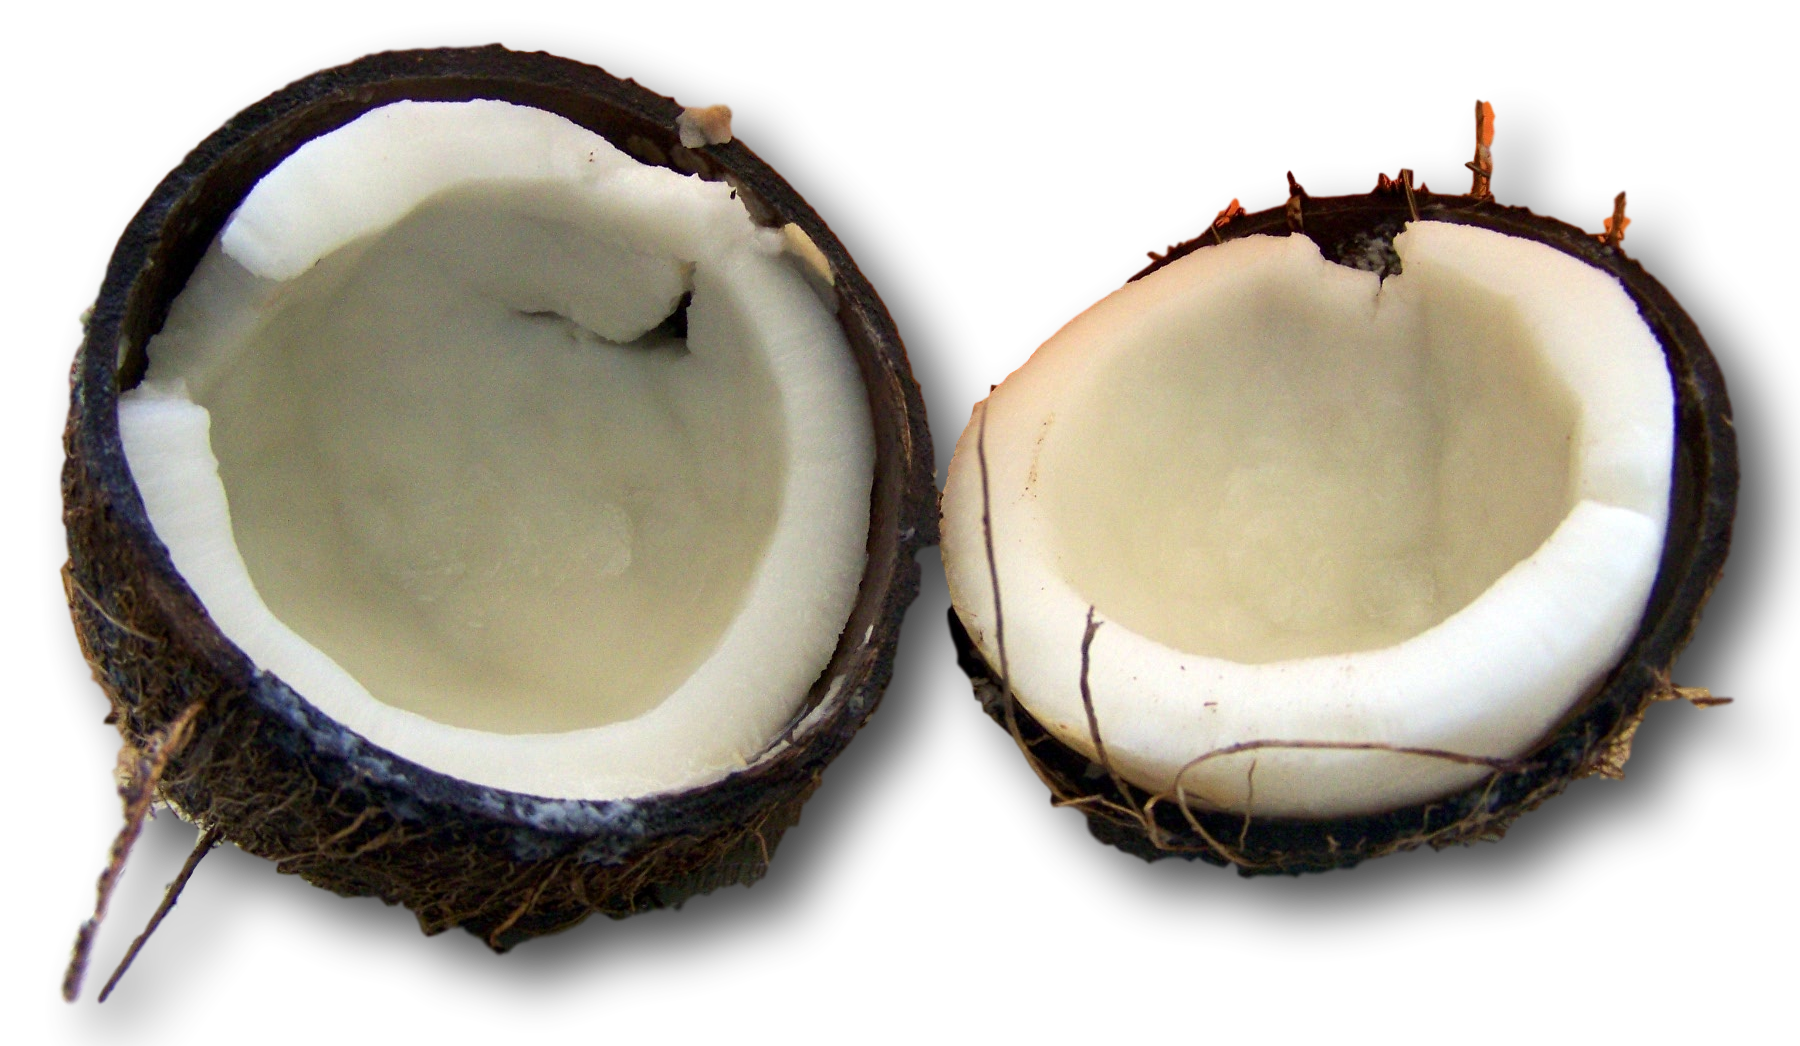 coconut oil hair treatment for hair loss and dry, damaged hair